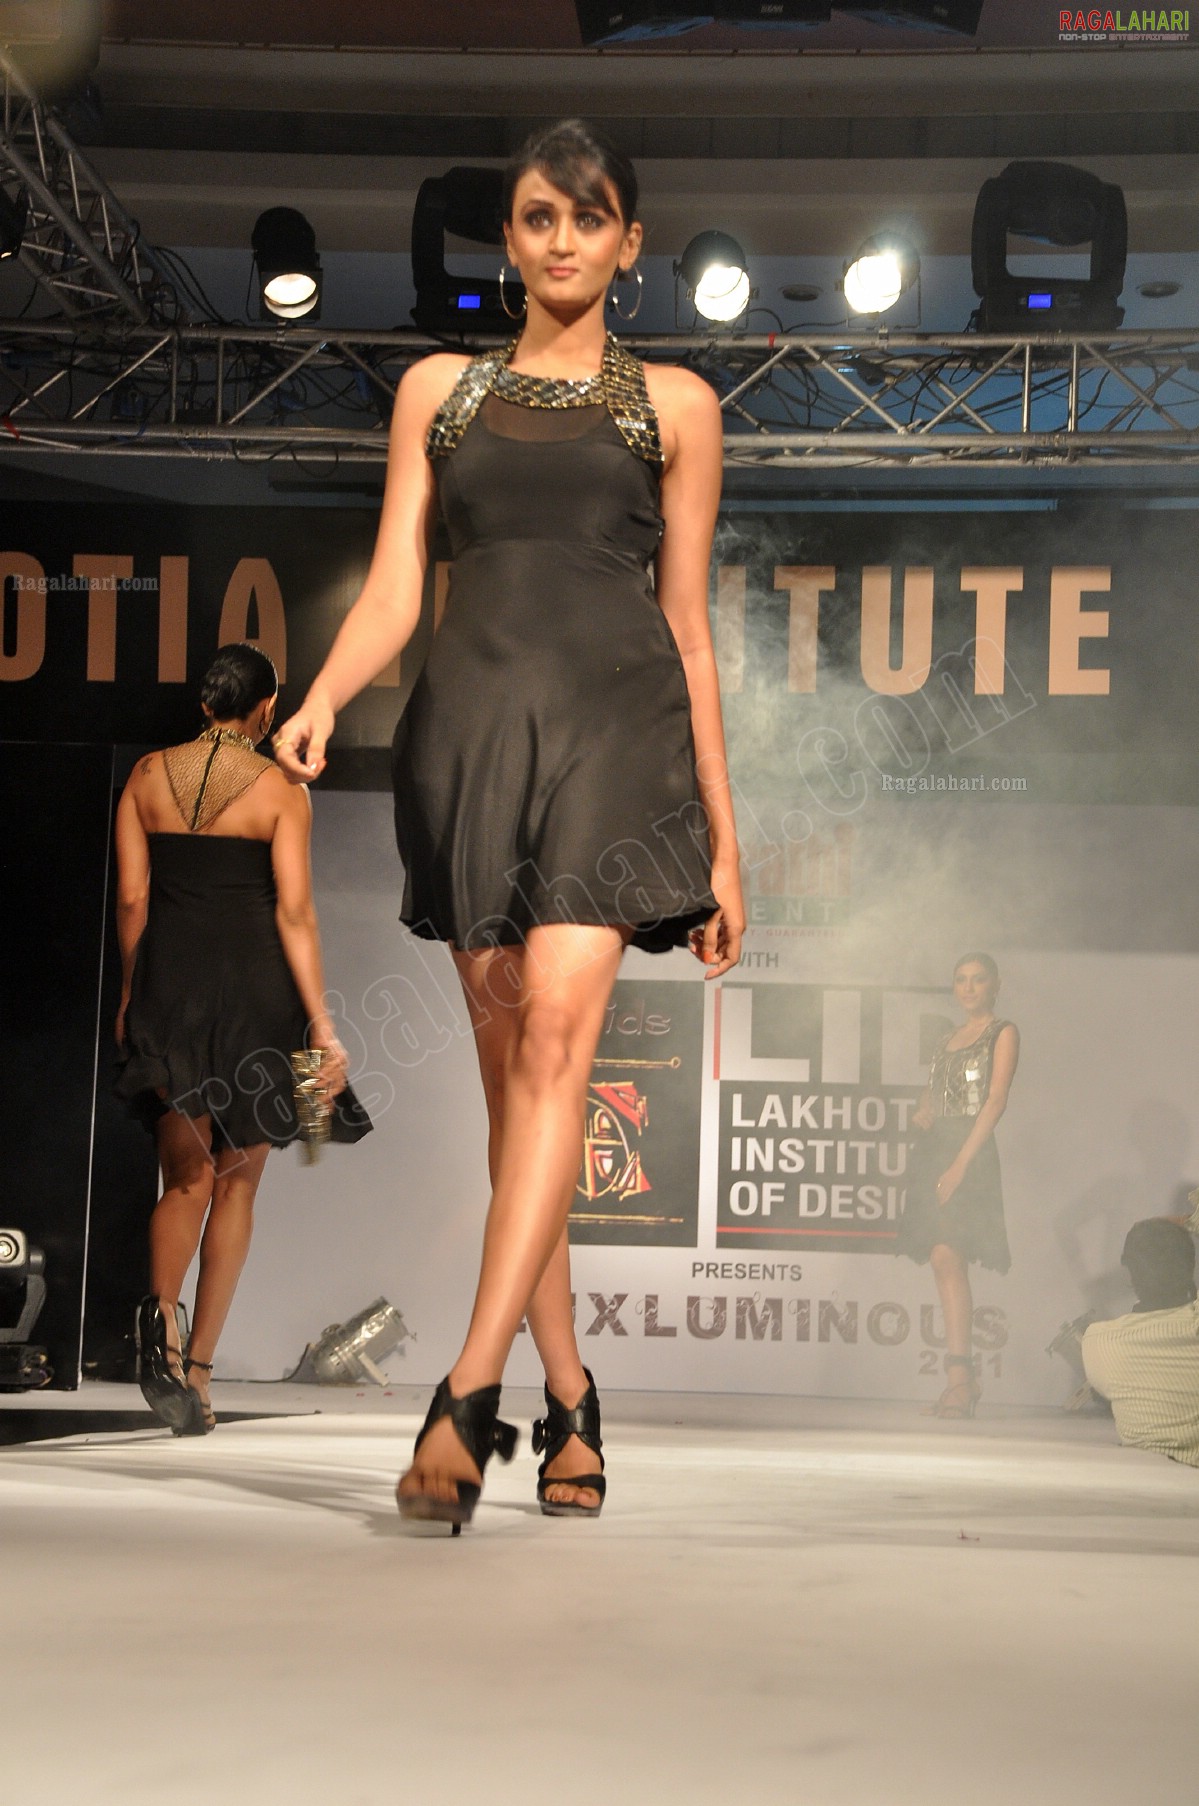 LID's Mega Fashion Show Luxluminous 2011